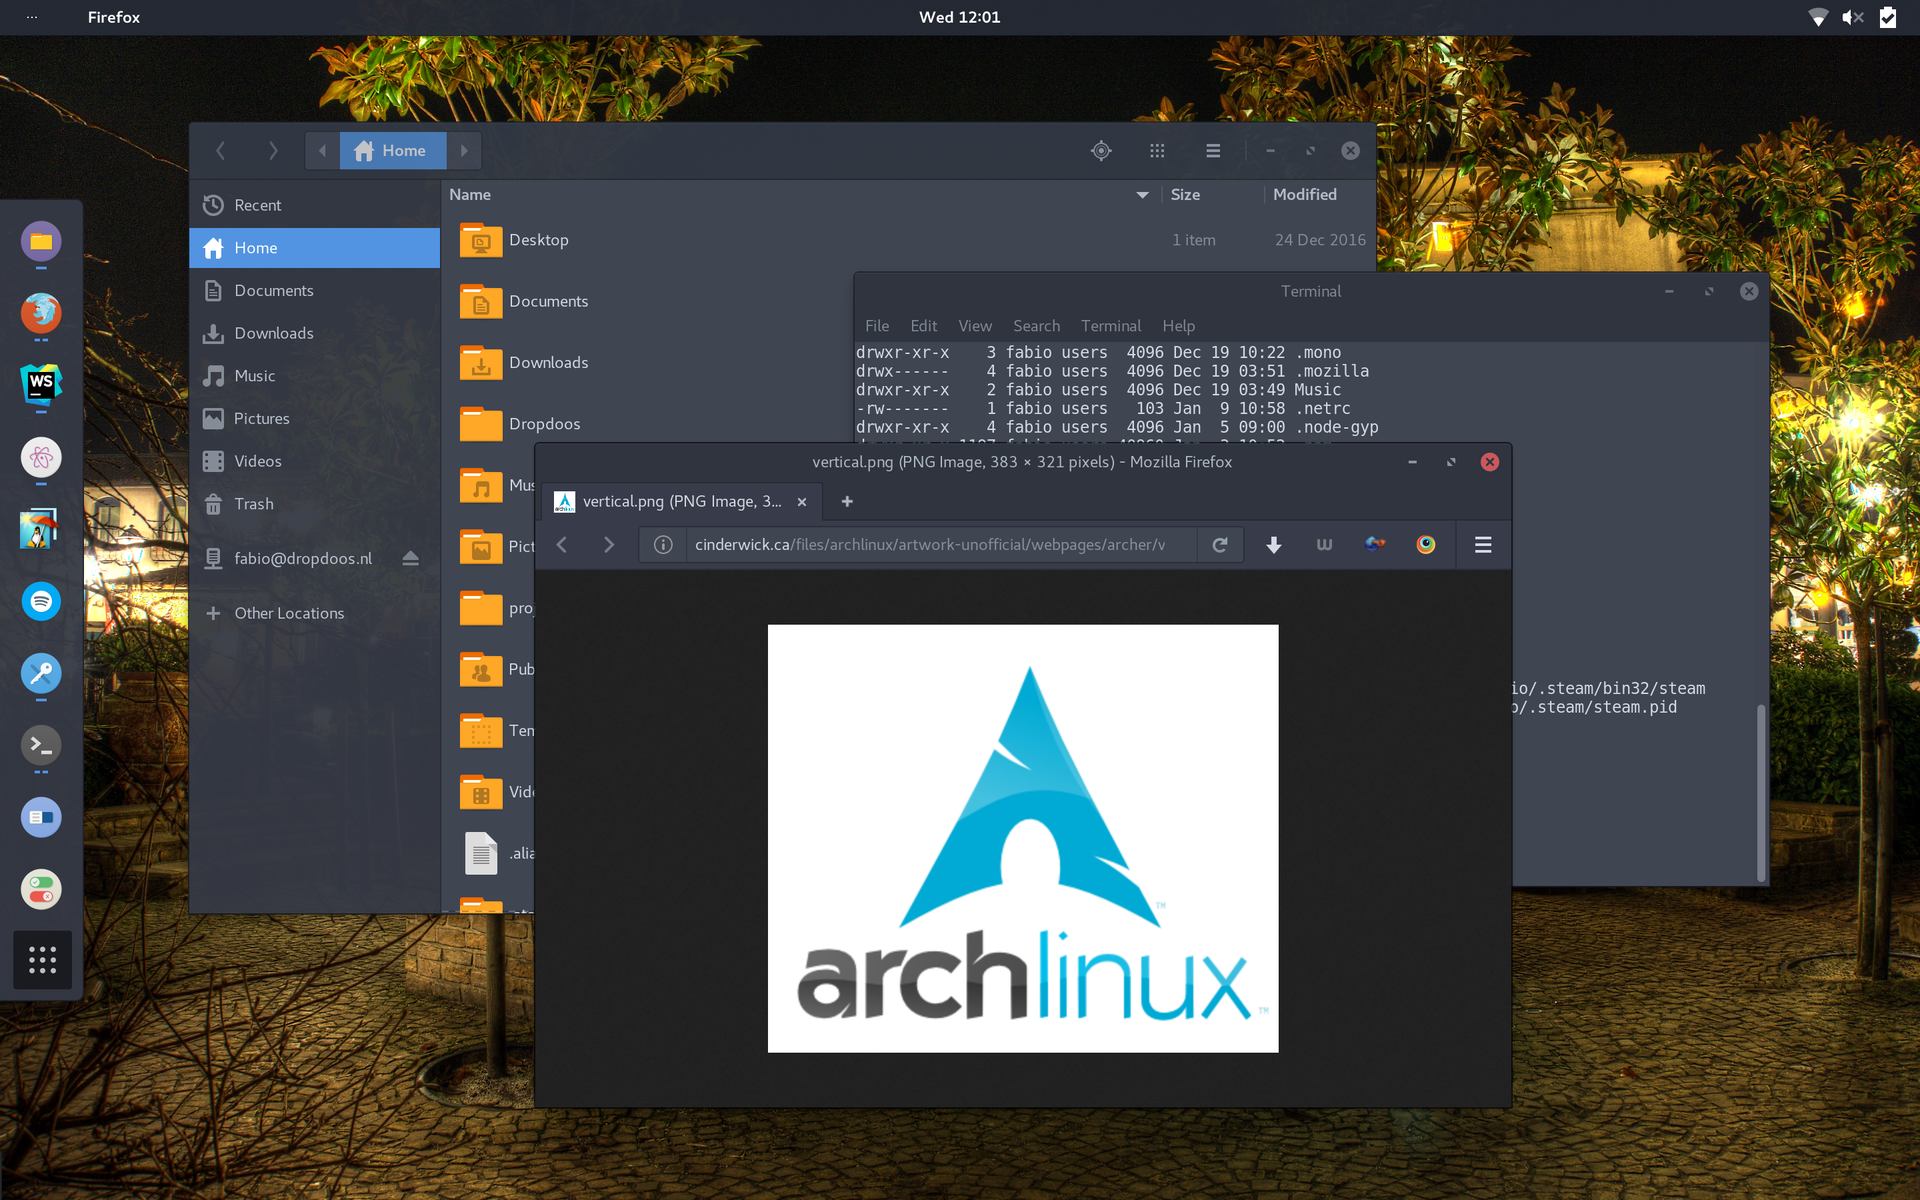 arch linux desktop environment reddit